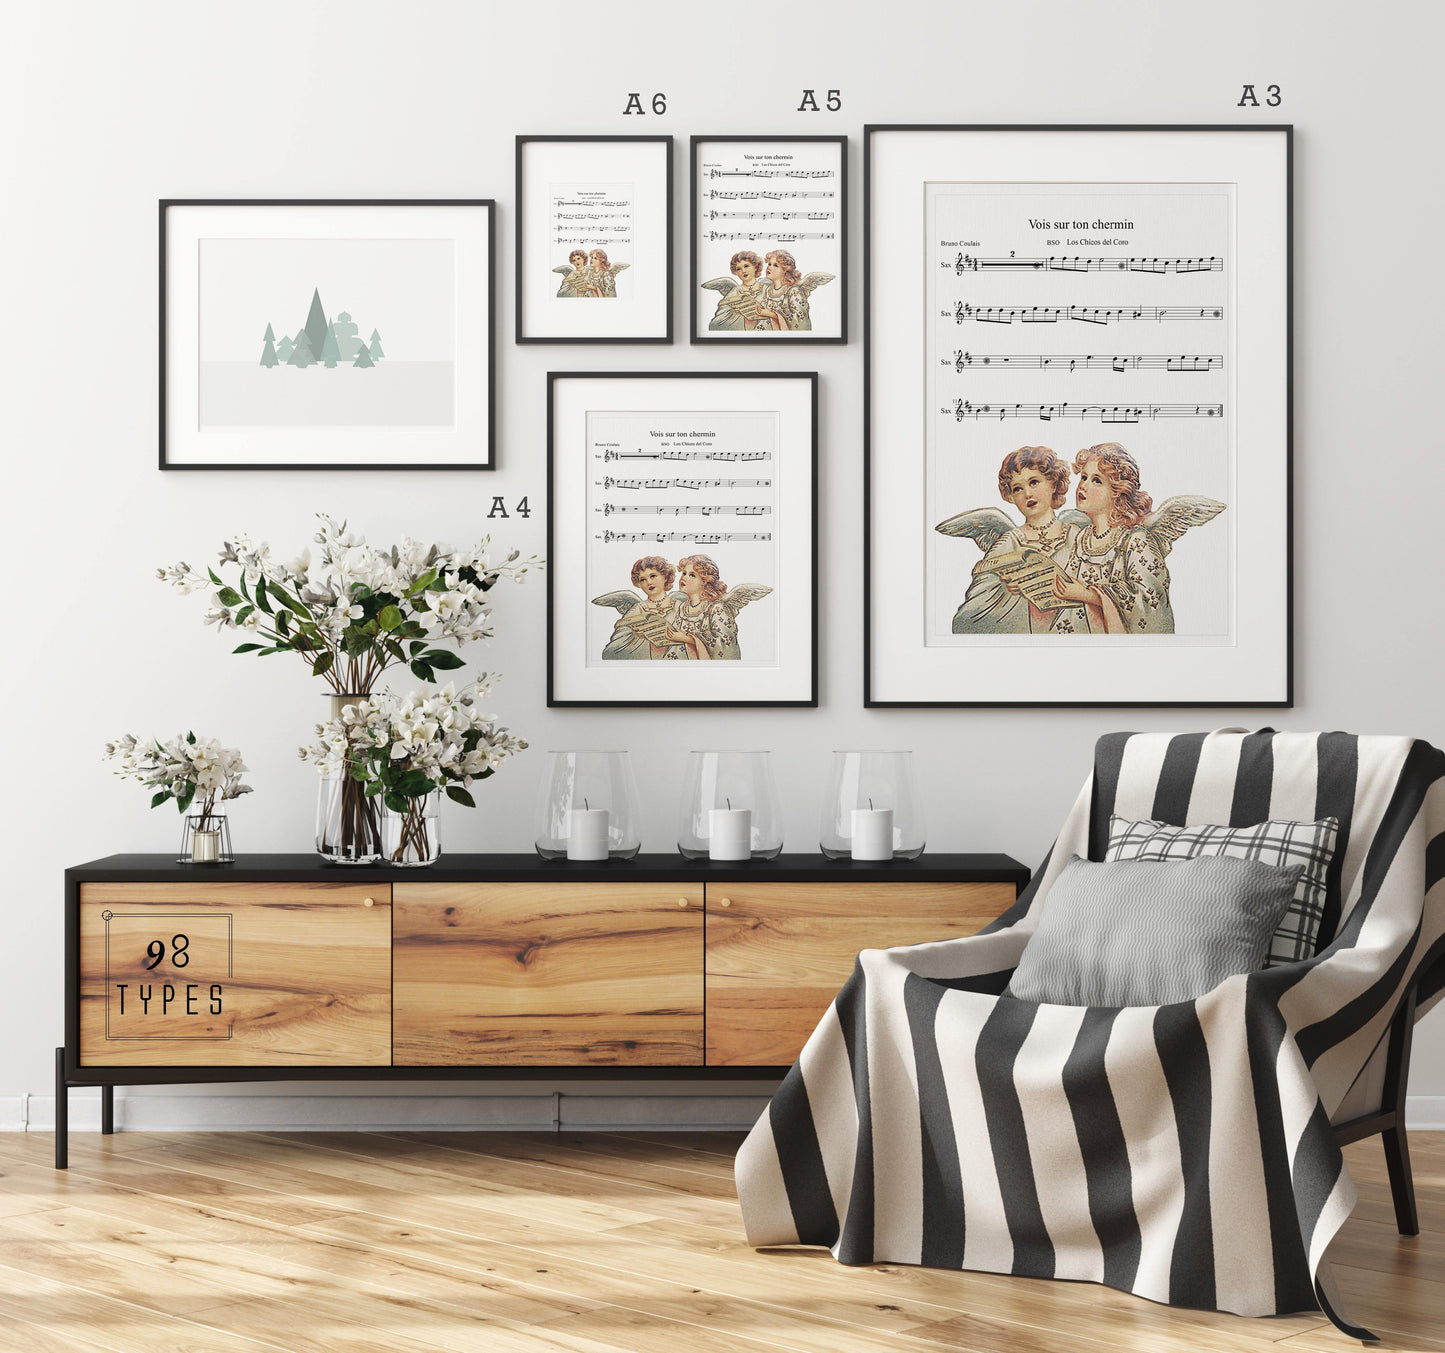 Les Choristes - Vois sur ton chemin Theme Song Print | Sheet Music Wall Art | Song Music Sheet Notes Print